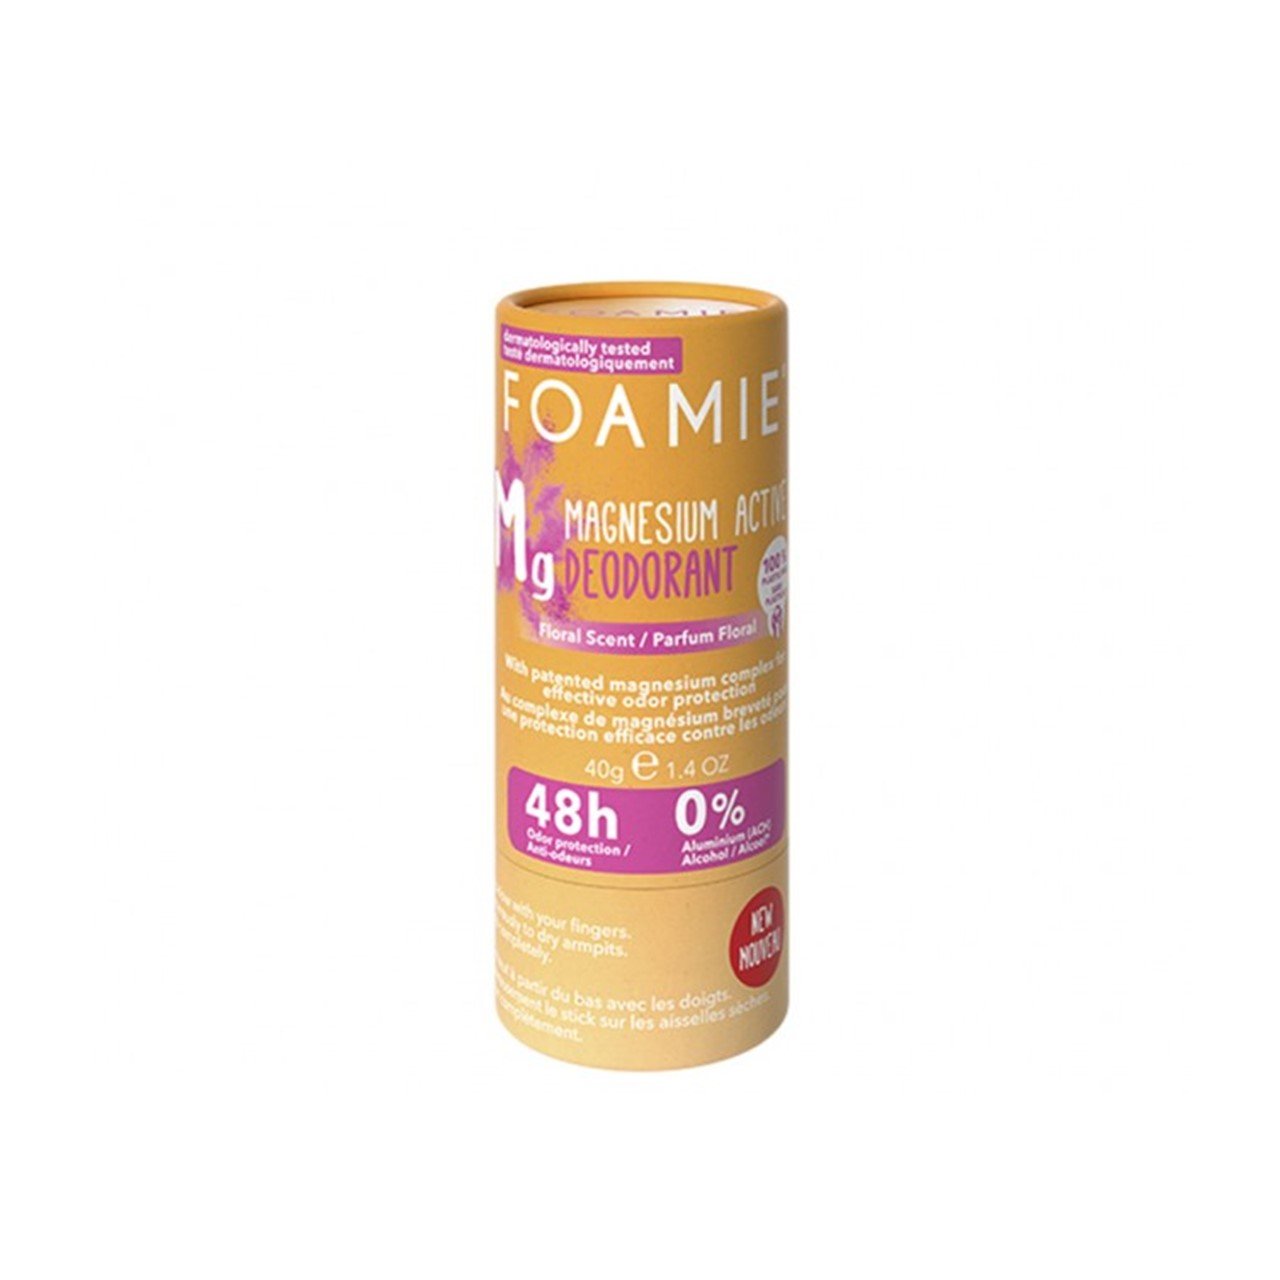 Foamie Happy Day Magnesium Active Solid Deodorant 48h 40g (1.4 oz)